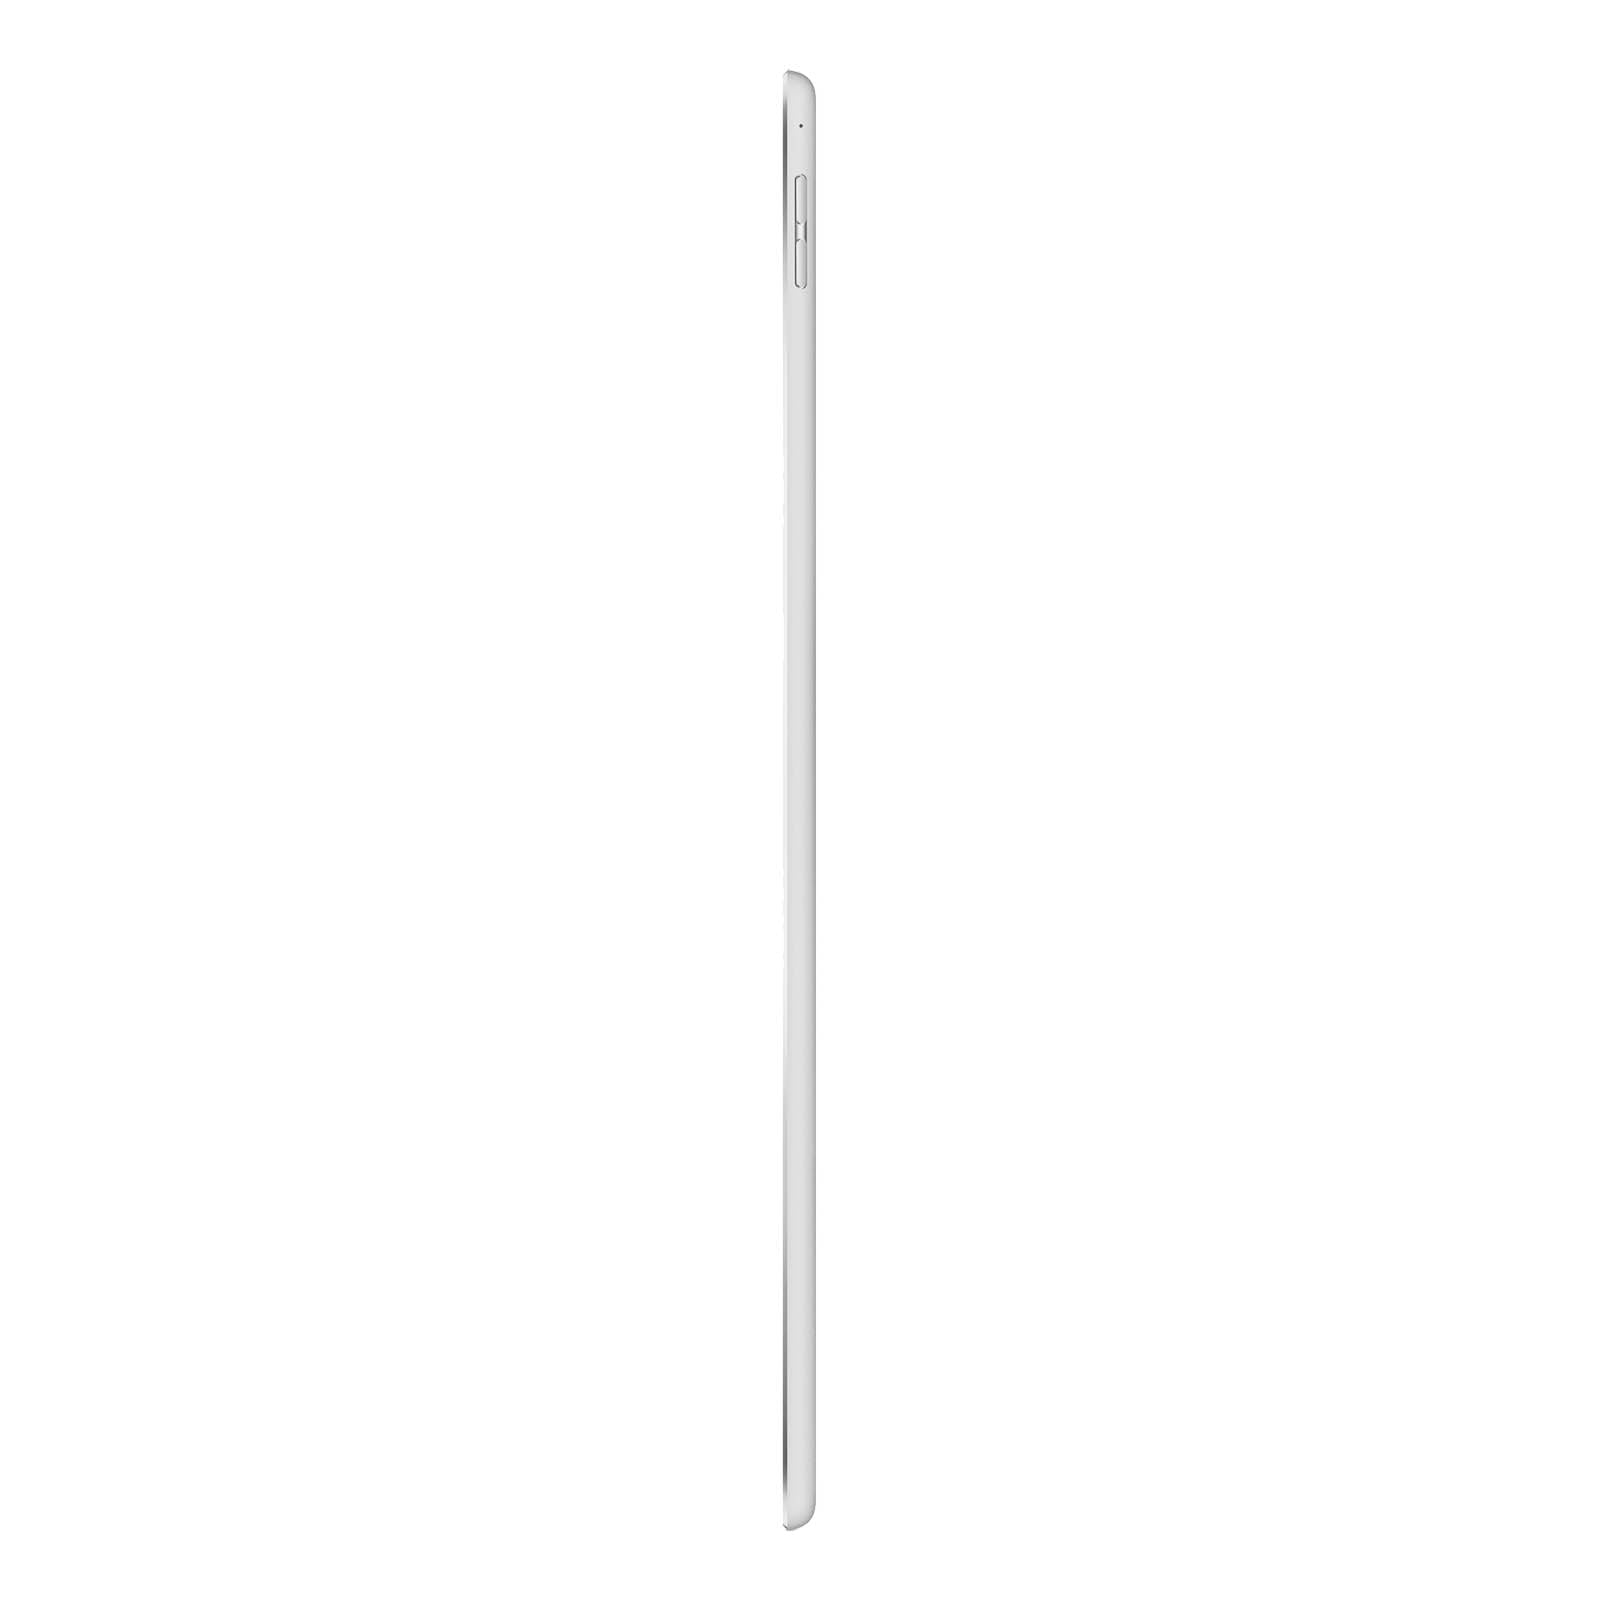 iPad Pro 12.9 Inch 2nd Gen 512GB Silver Good - WiFi